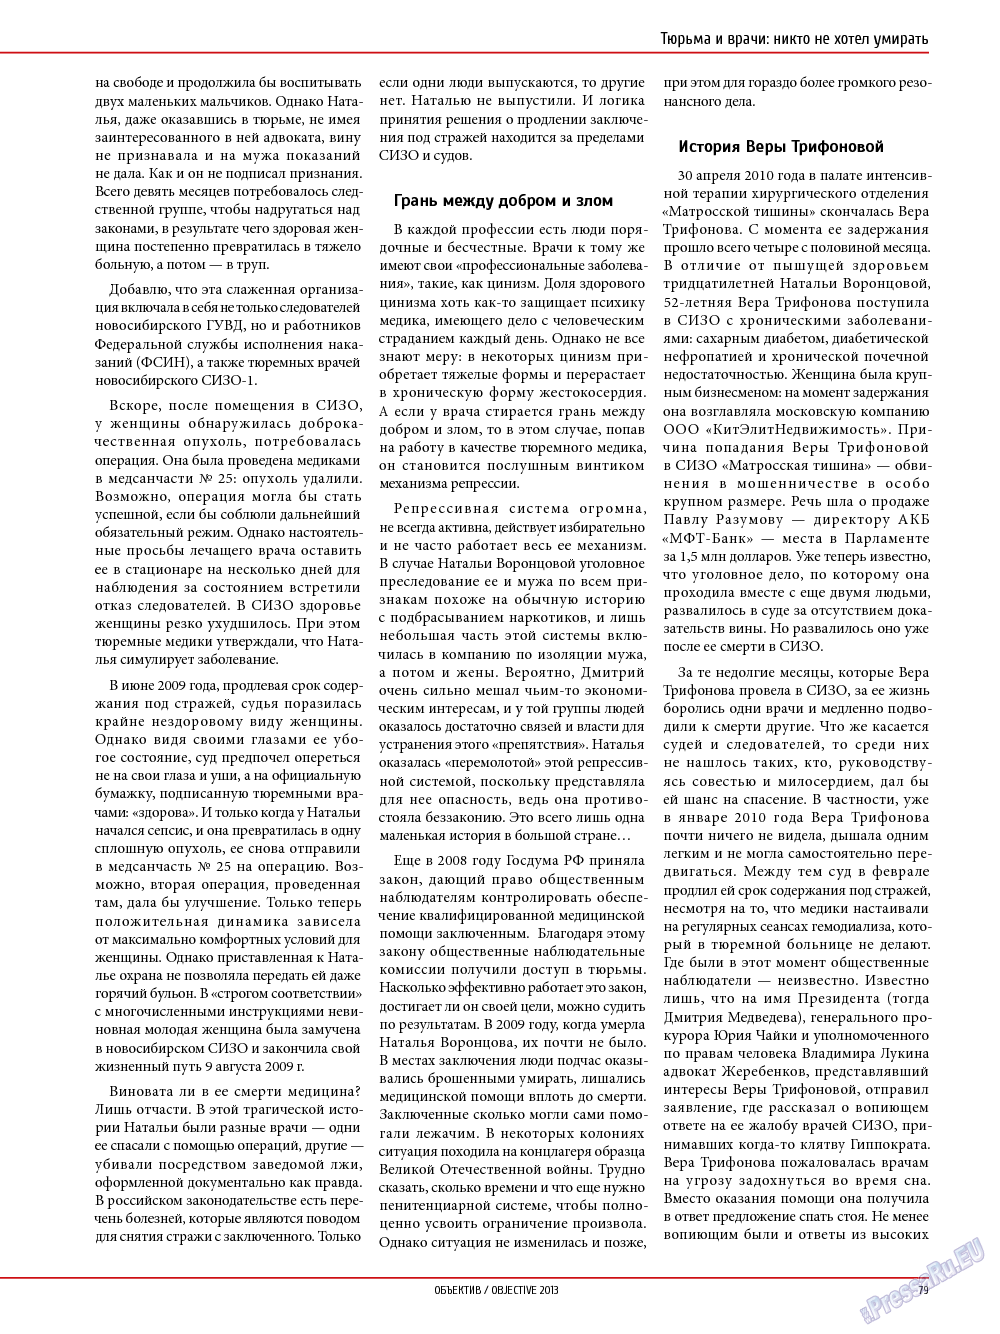 Объектив EU, журнал. 2013 №5 стр.79